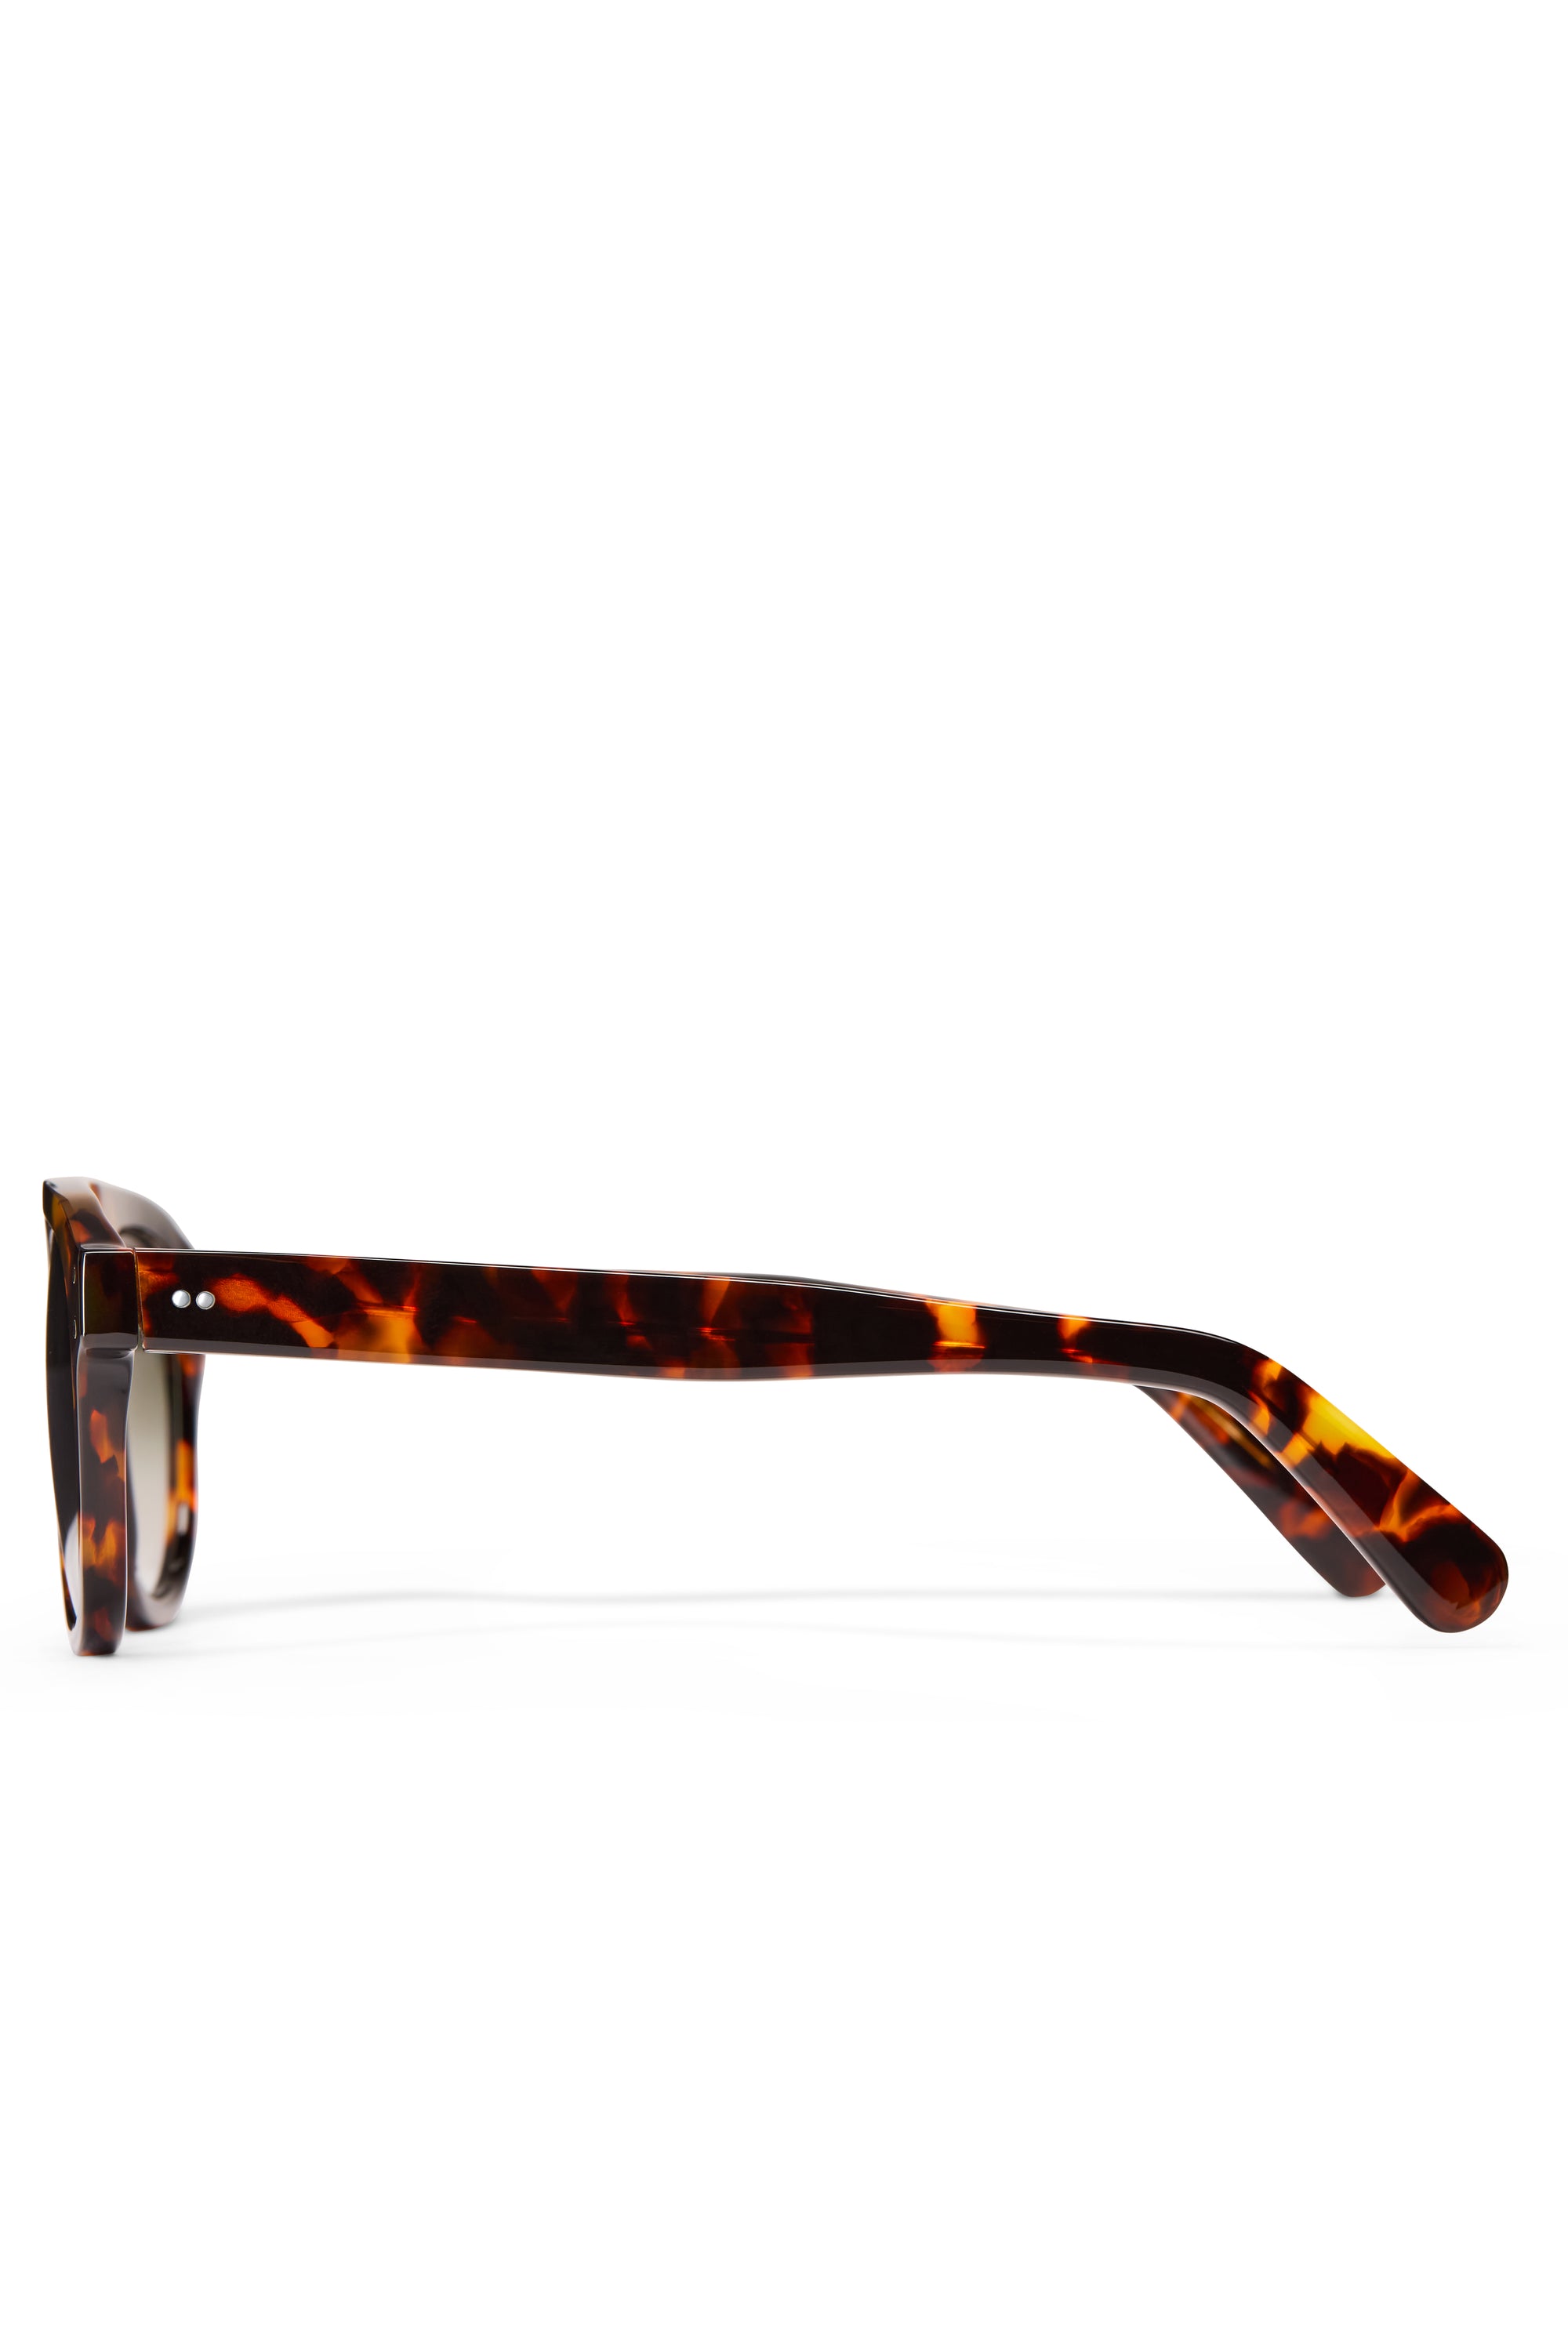 The Neutra Sunglasses